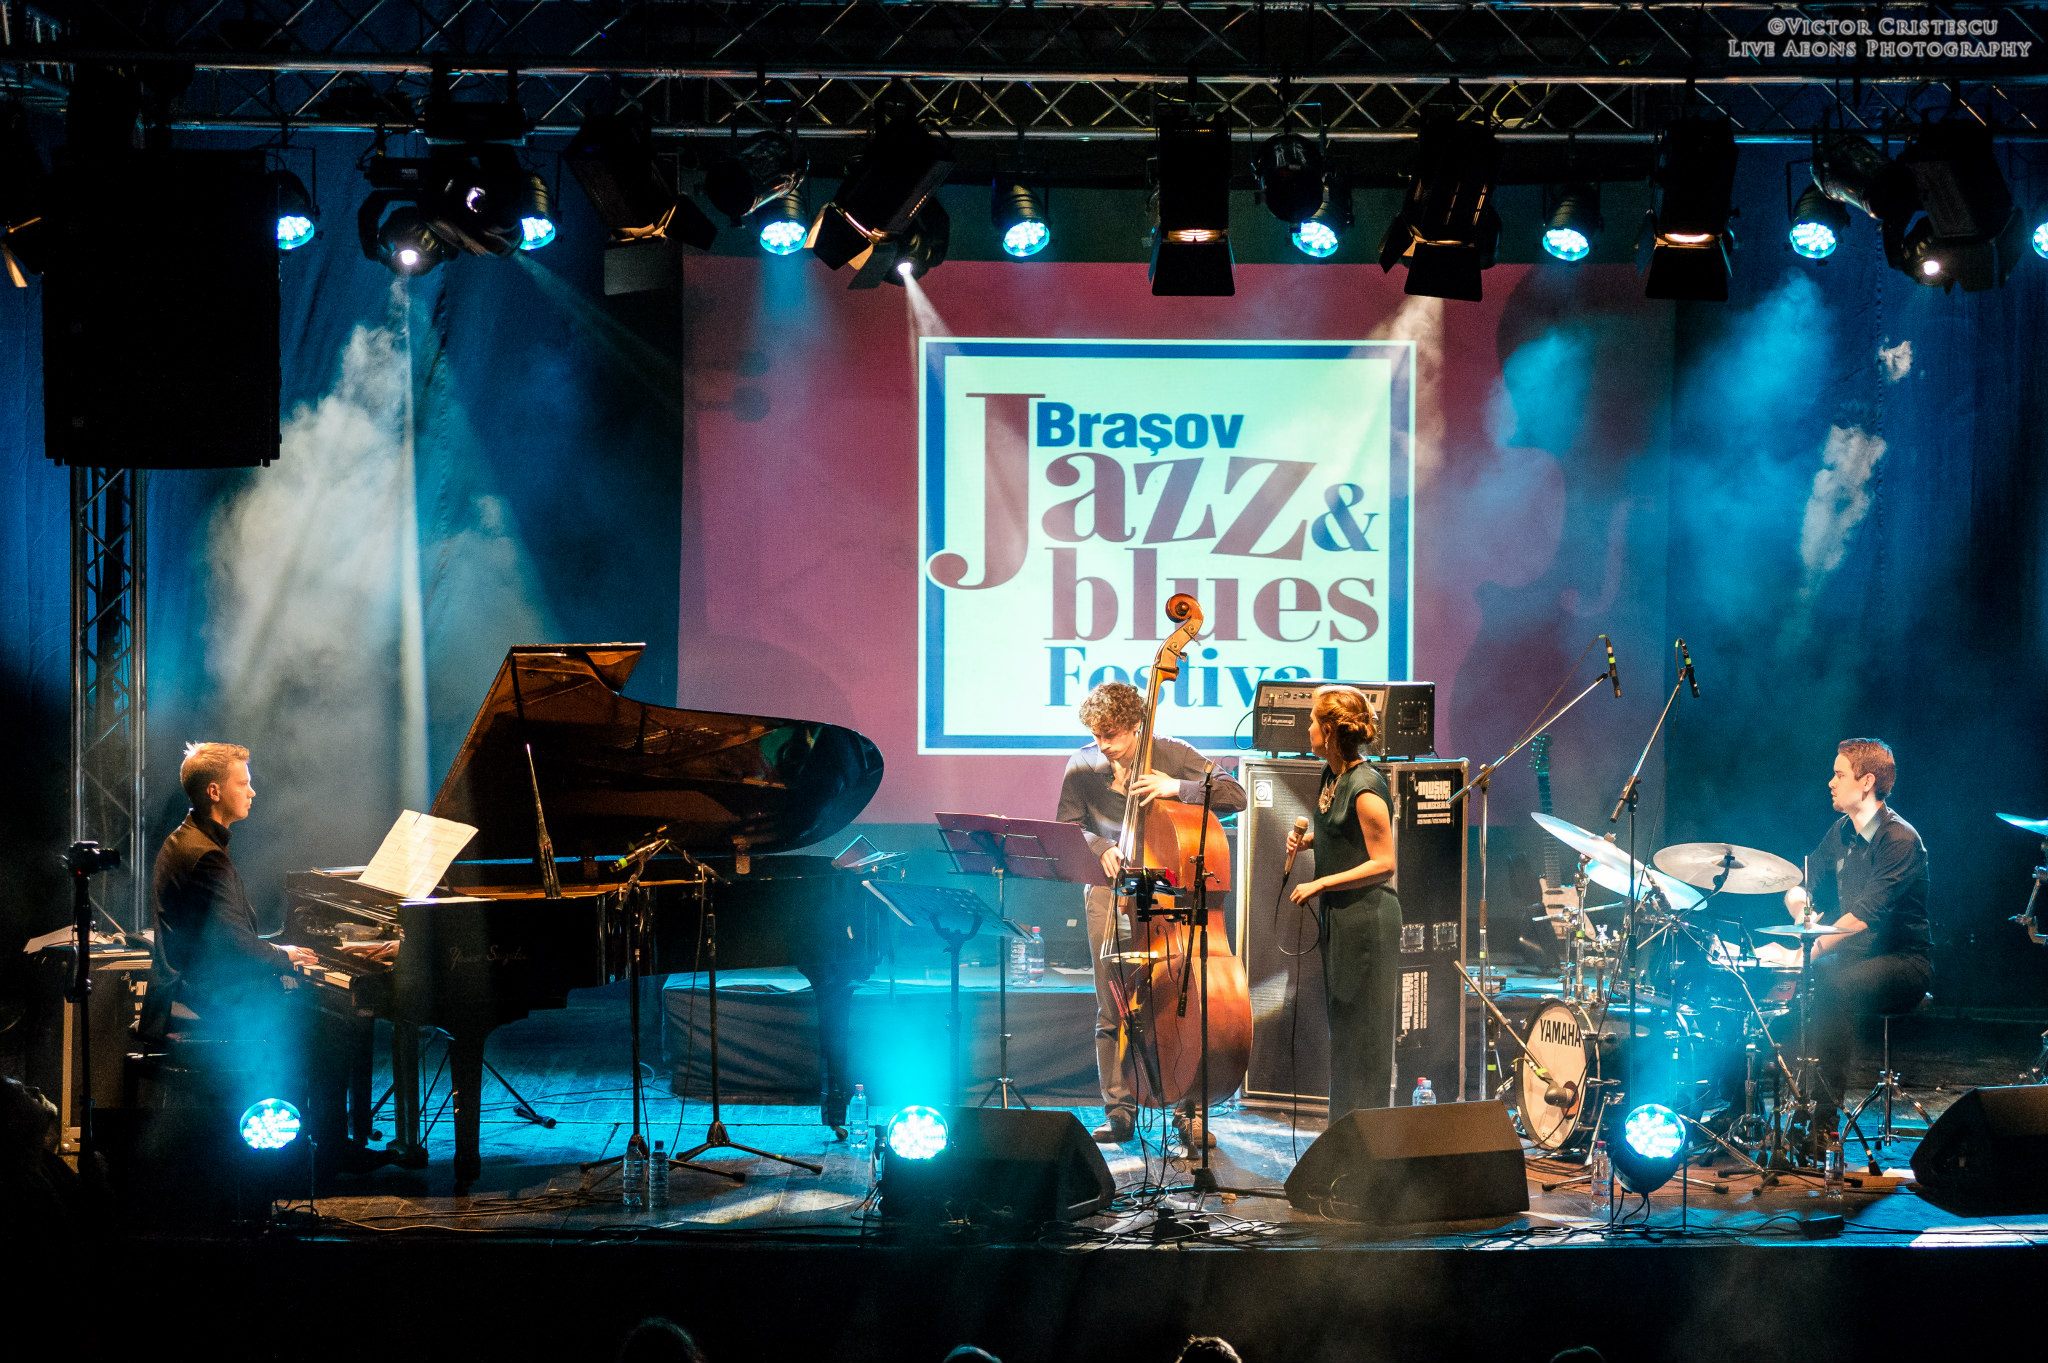 Jazz And Blues Festival Brasov 2015 Concert Muzica Live Sistem Sunet Lumini Scena  3 MUSIC GEAR (20)